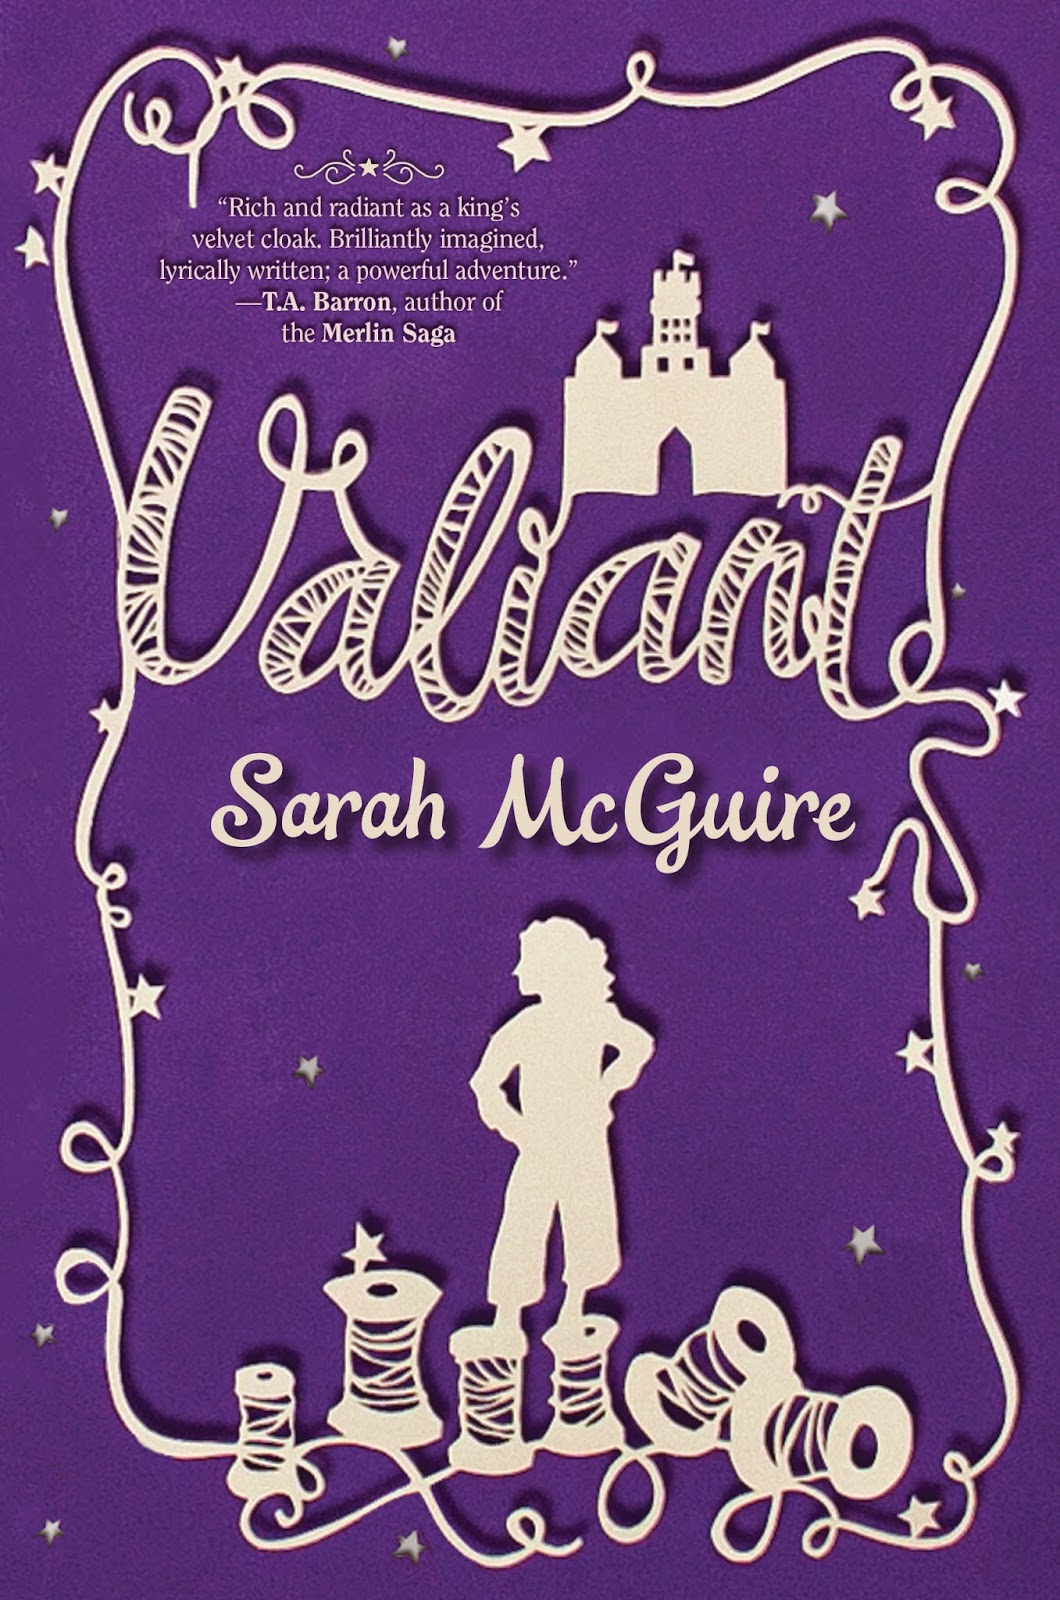 New Voice & Giveaway: Sarah McGuire on Valiant